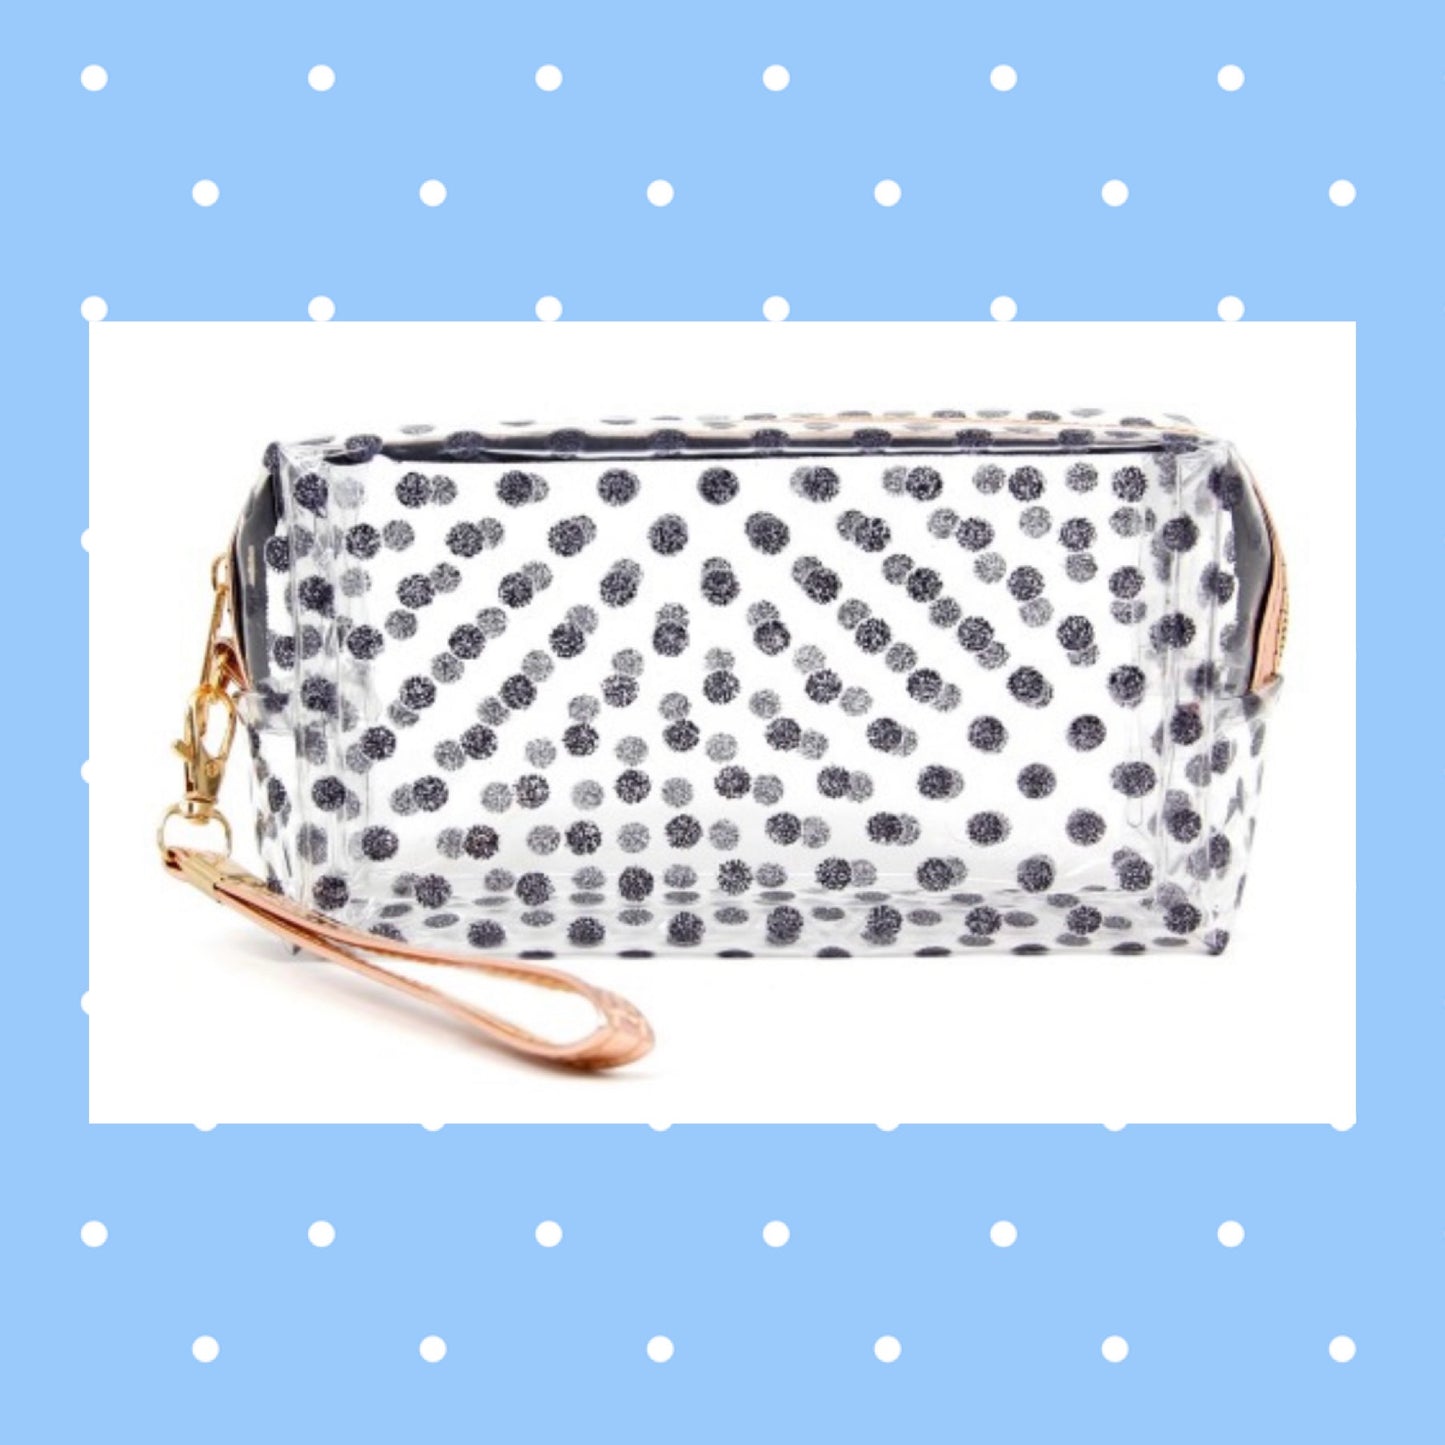 Black Glittered Polka Dots Clear PVC Makeup / Cosmetic Bag Wristlet